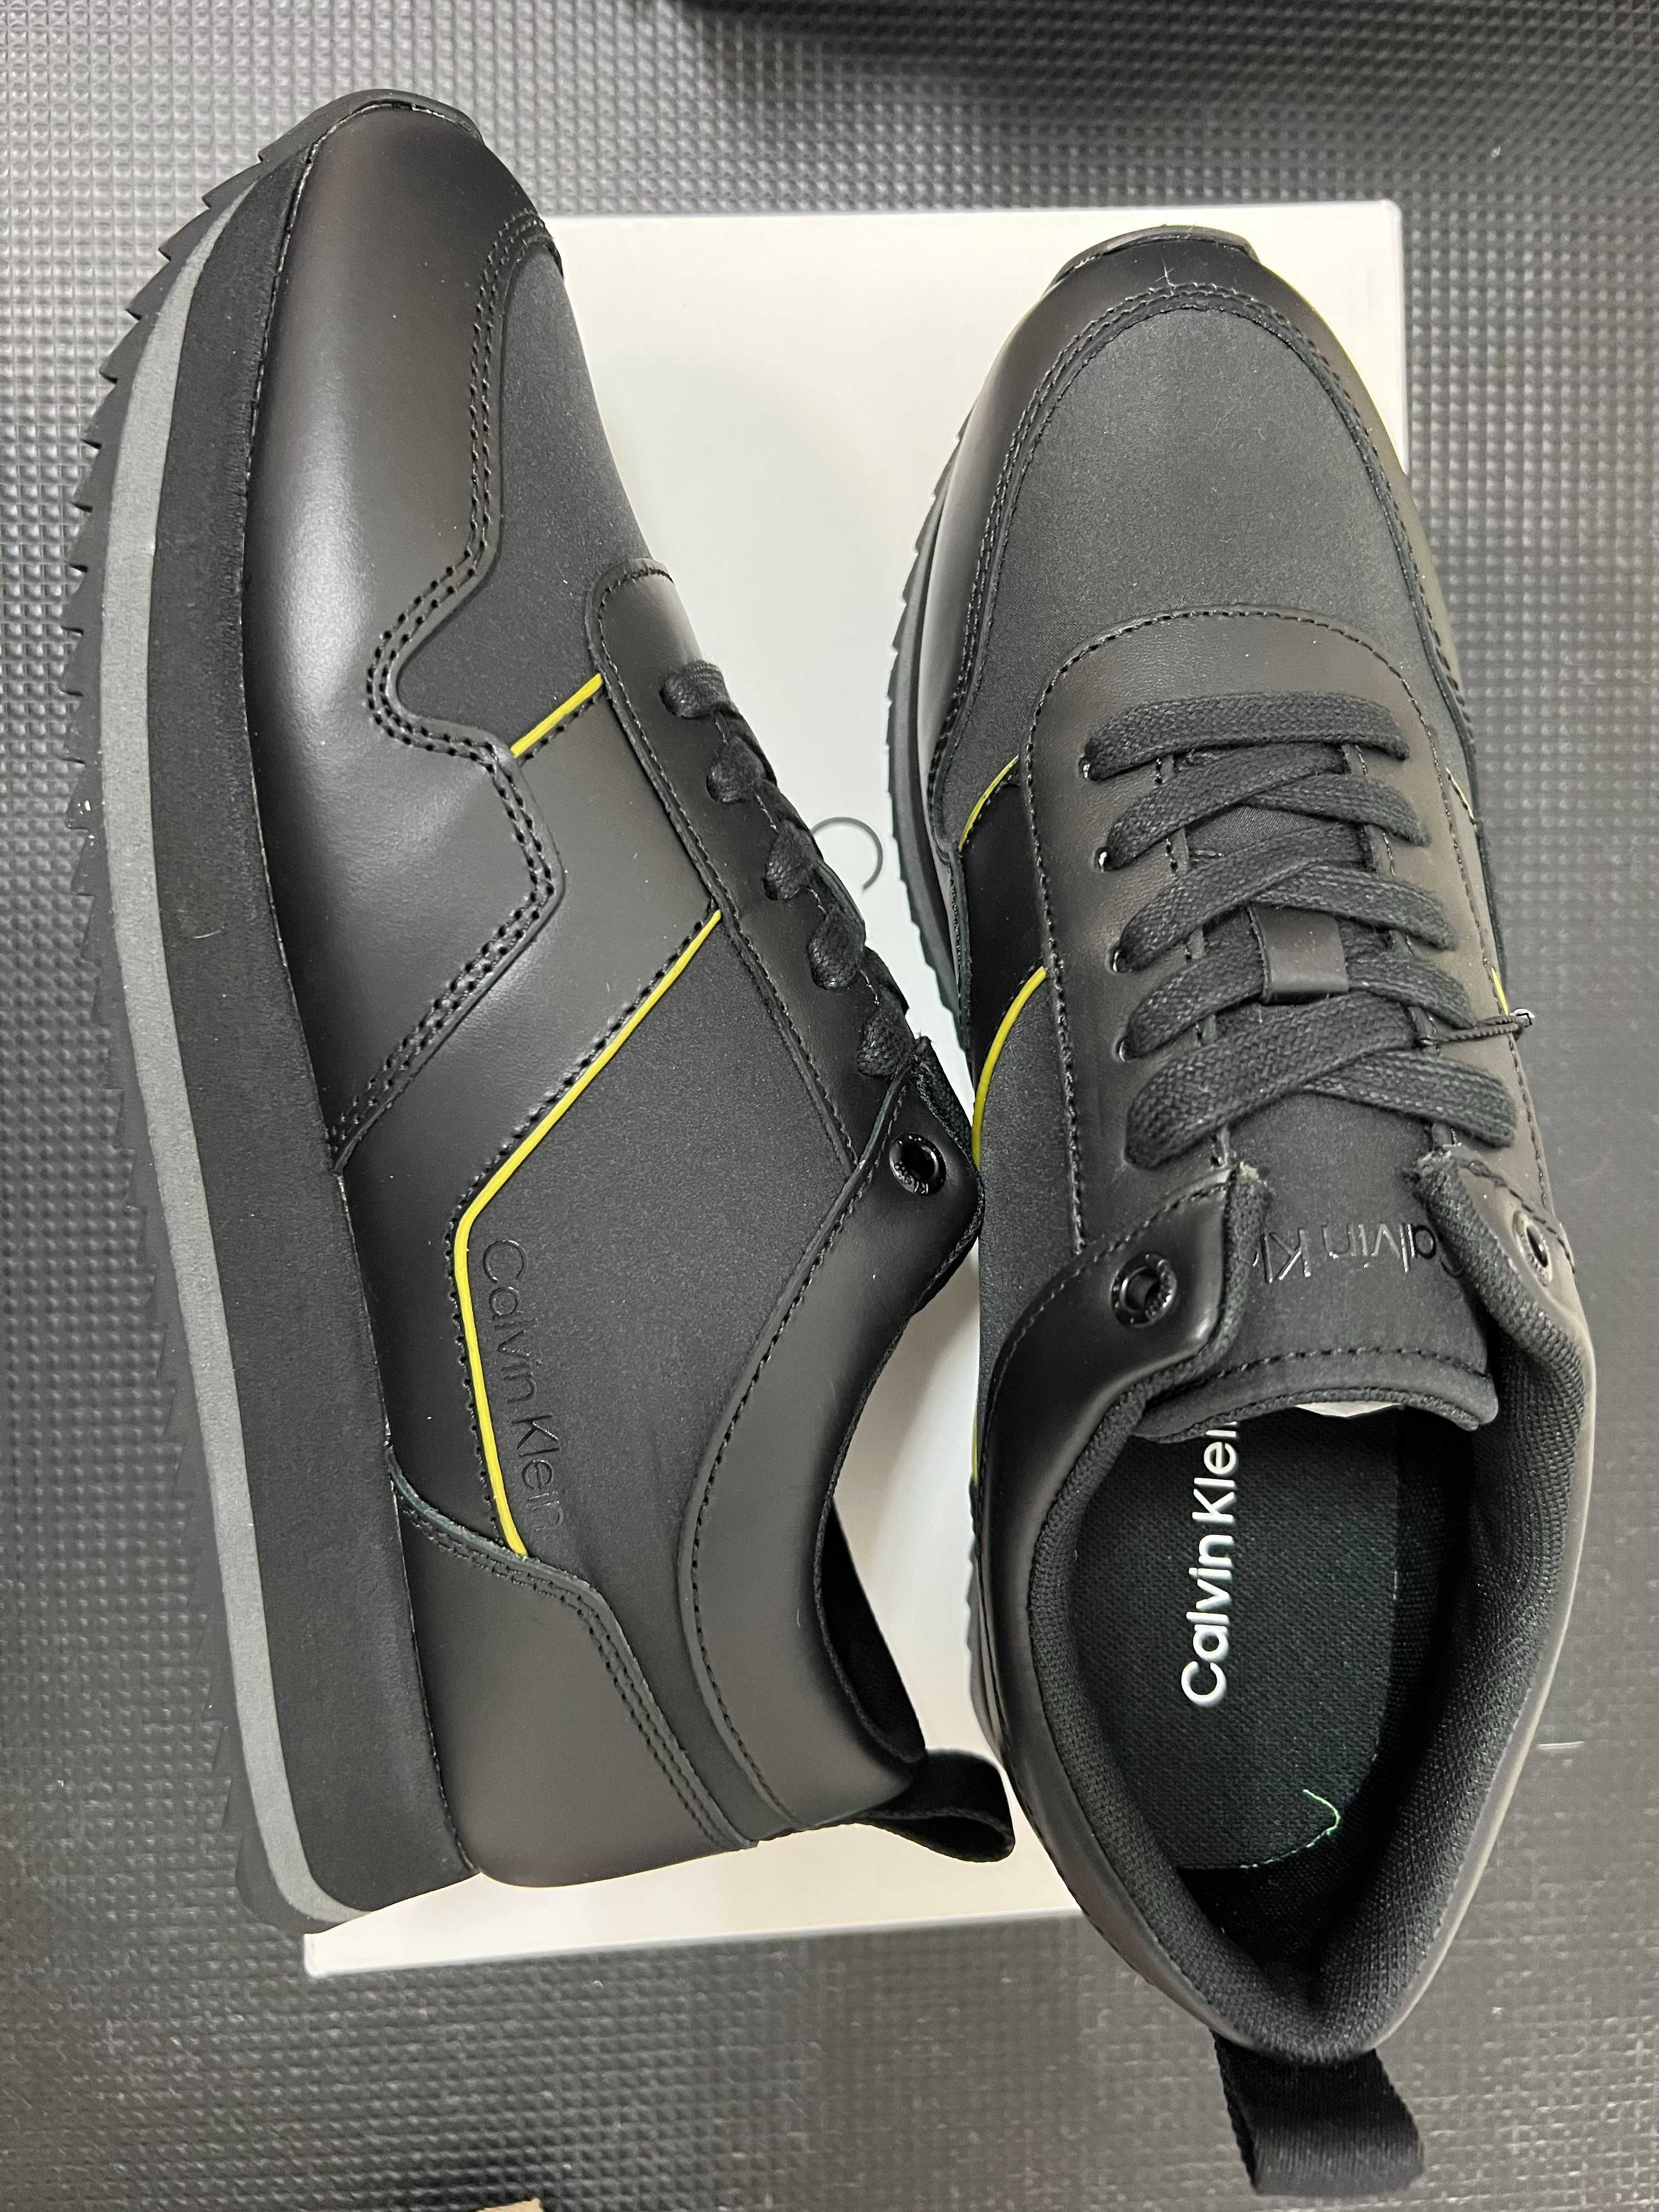 Adidasi / sneakers Calvin Klein, mărime 40,  preț 310 lei